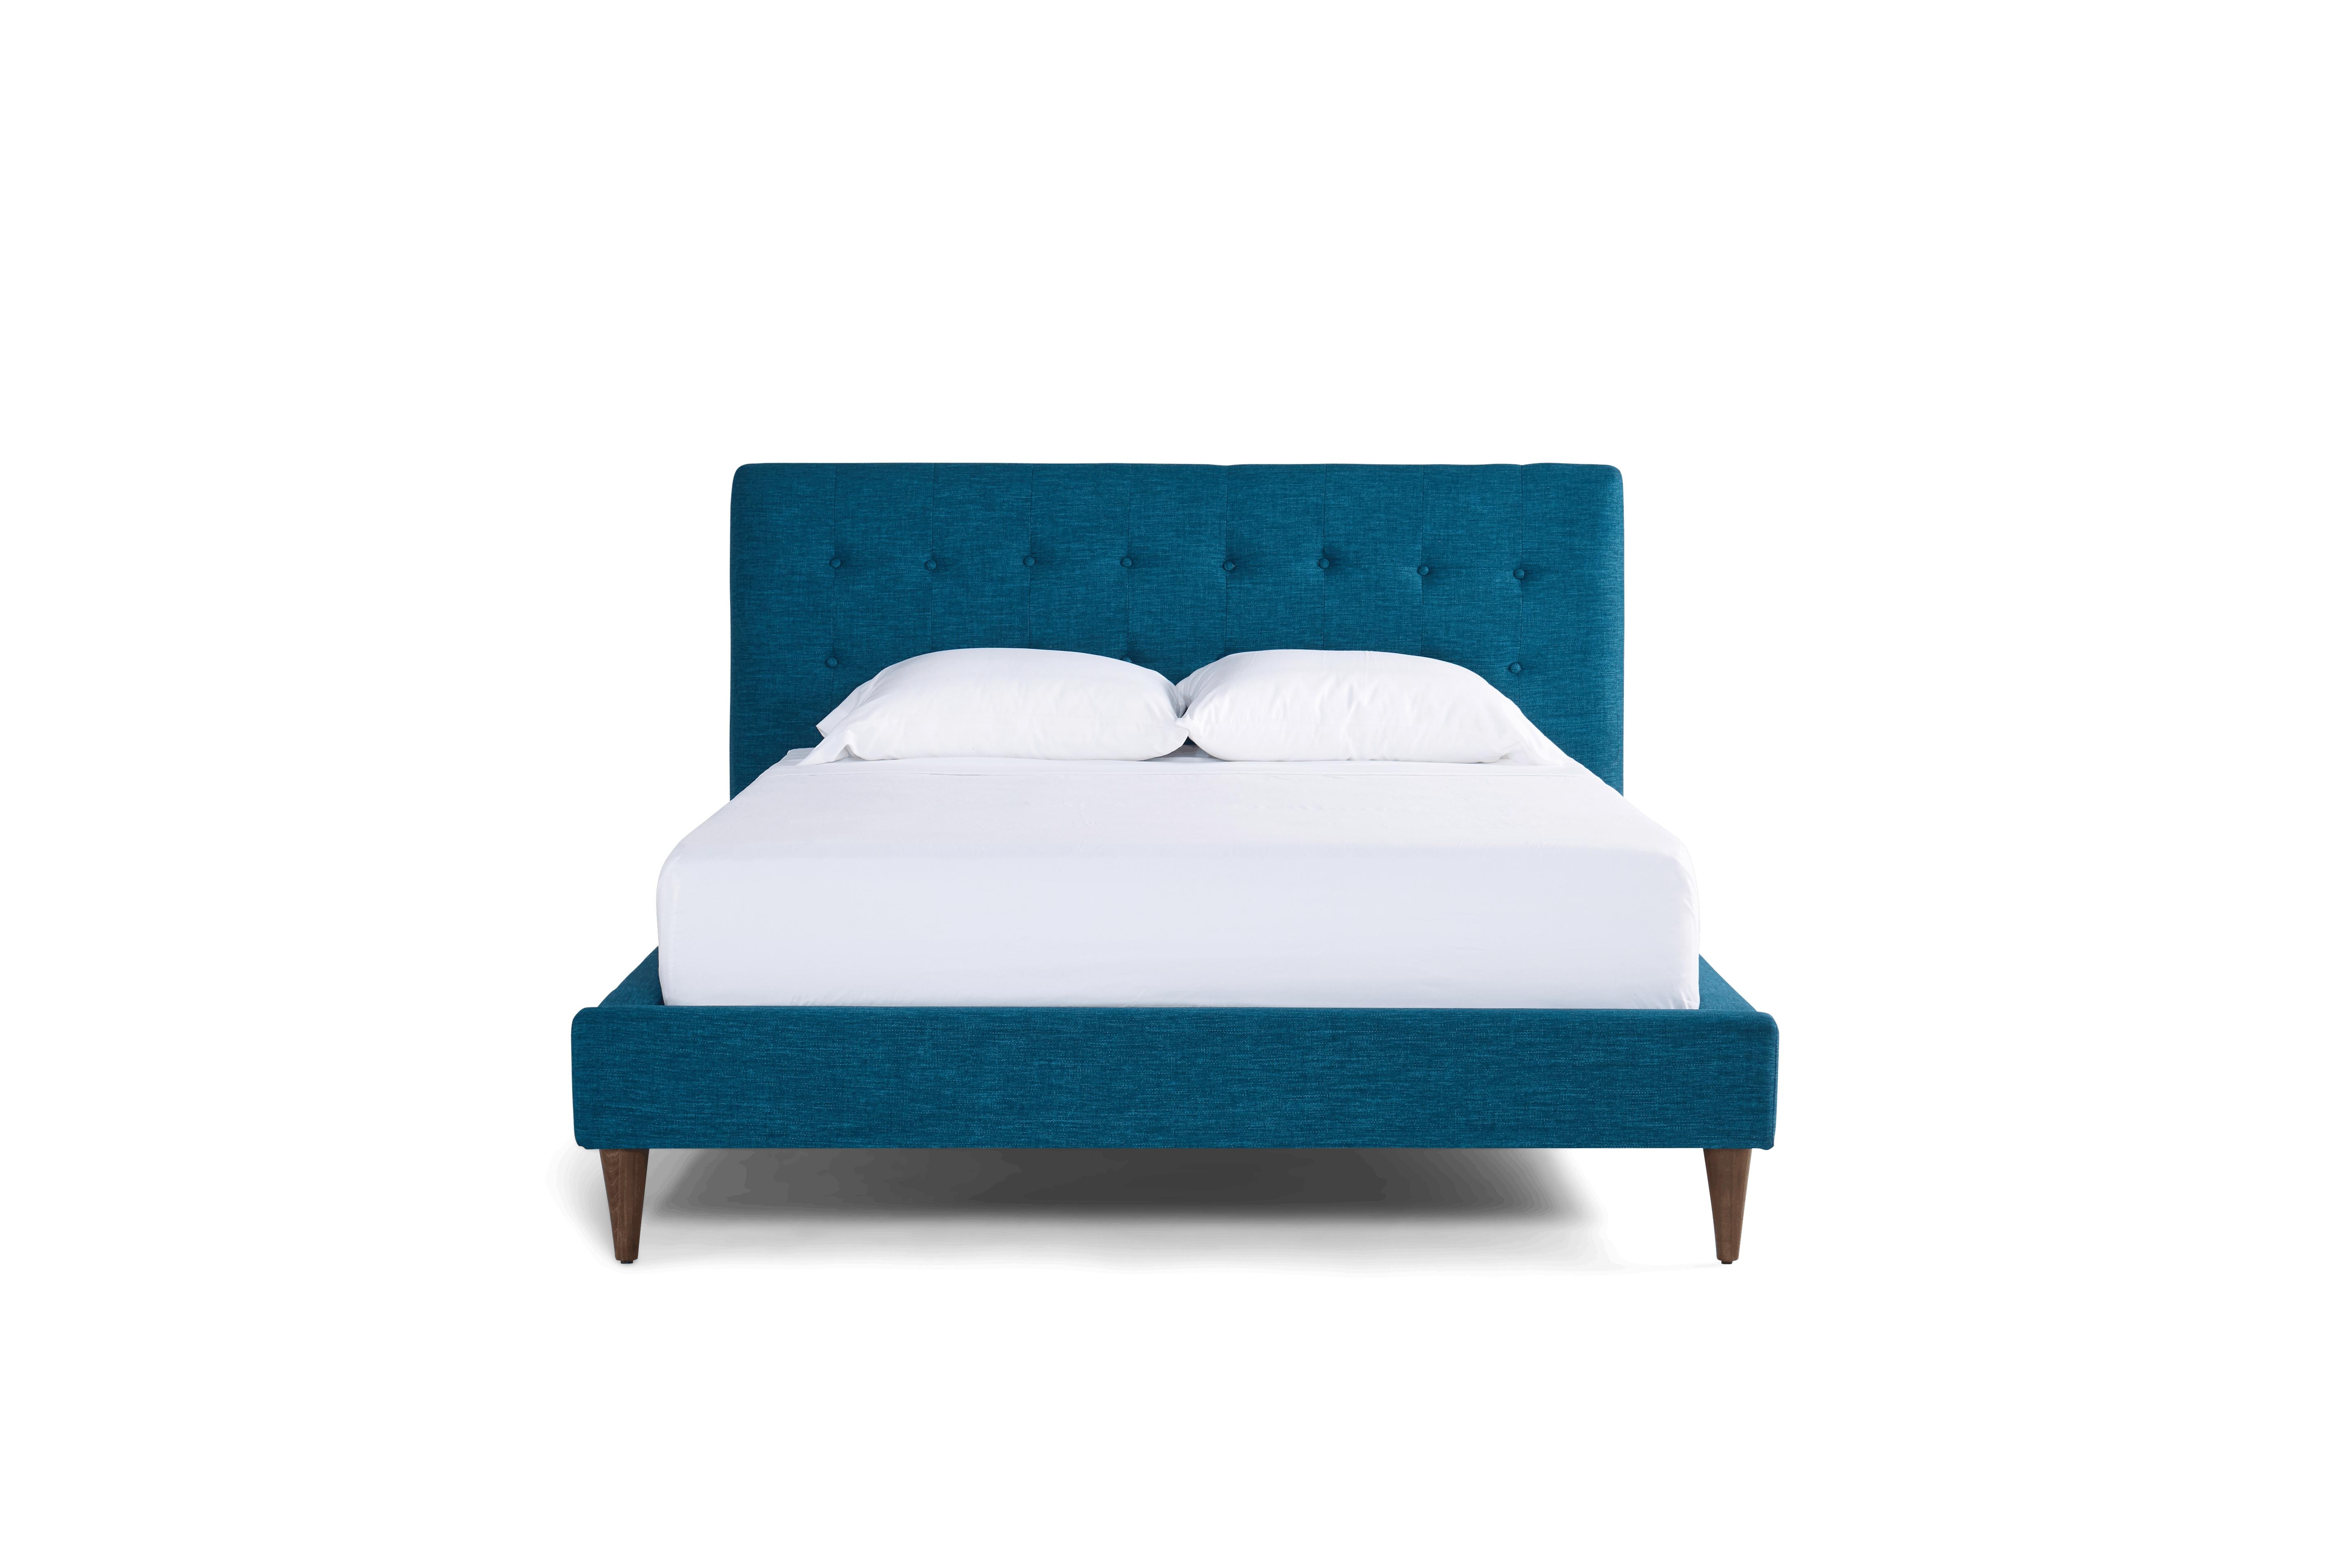 Blue Eliot Mid Century Modern Bed - Key Largo Zenith Teal - Mocha - Cal King - Image 0